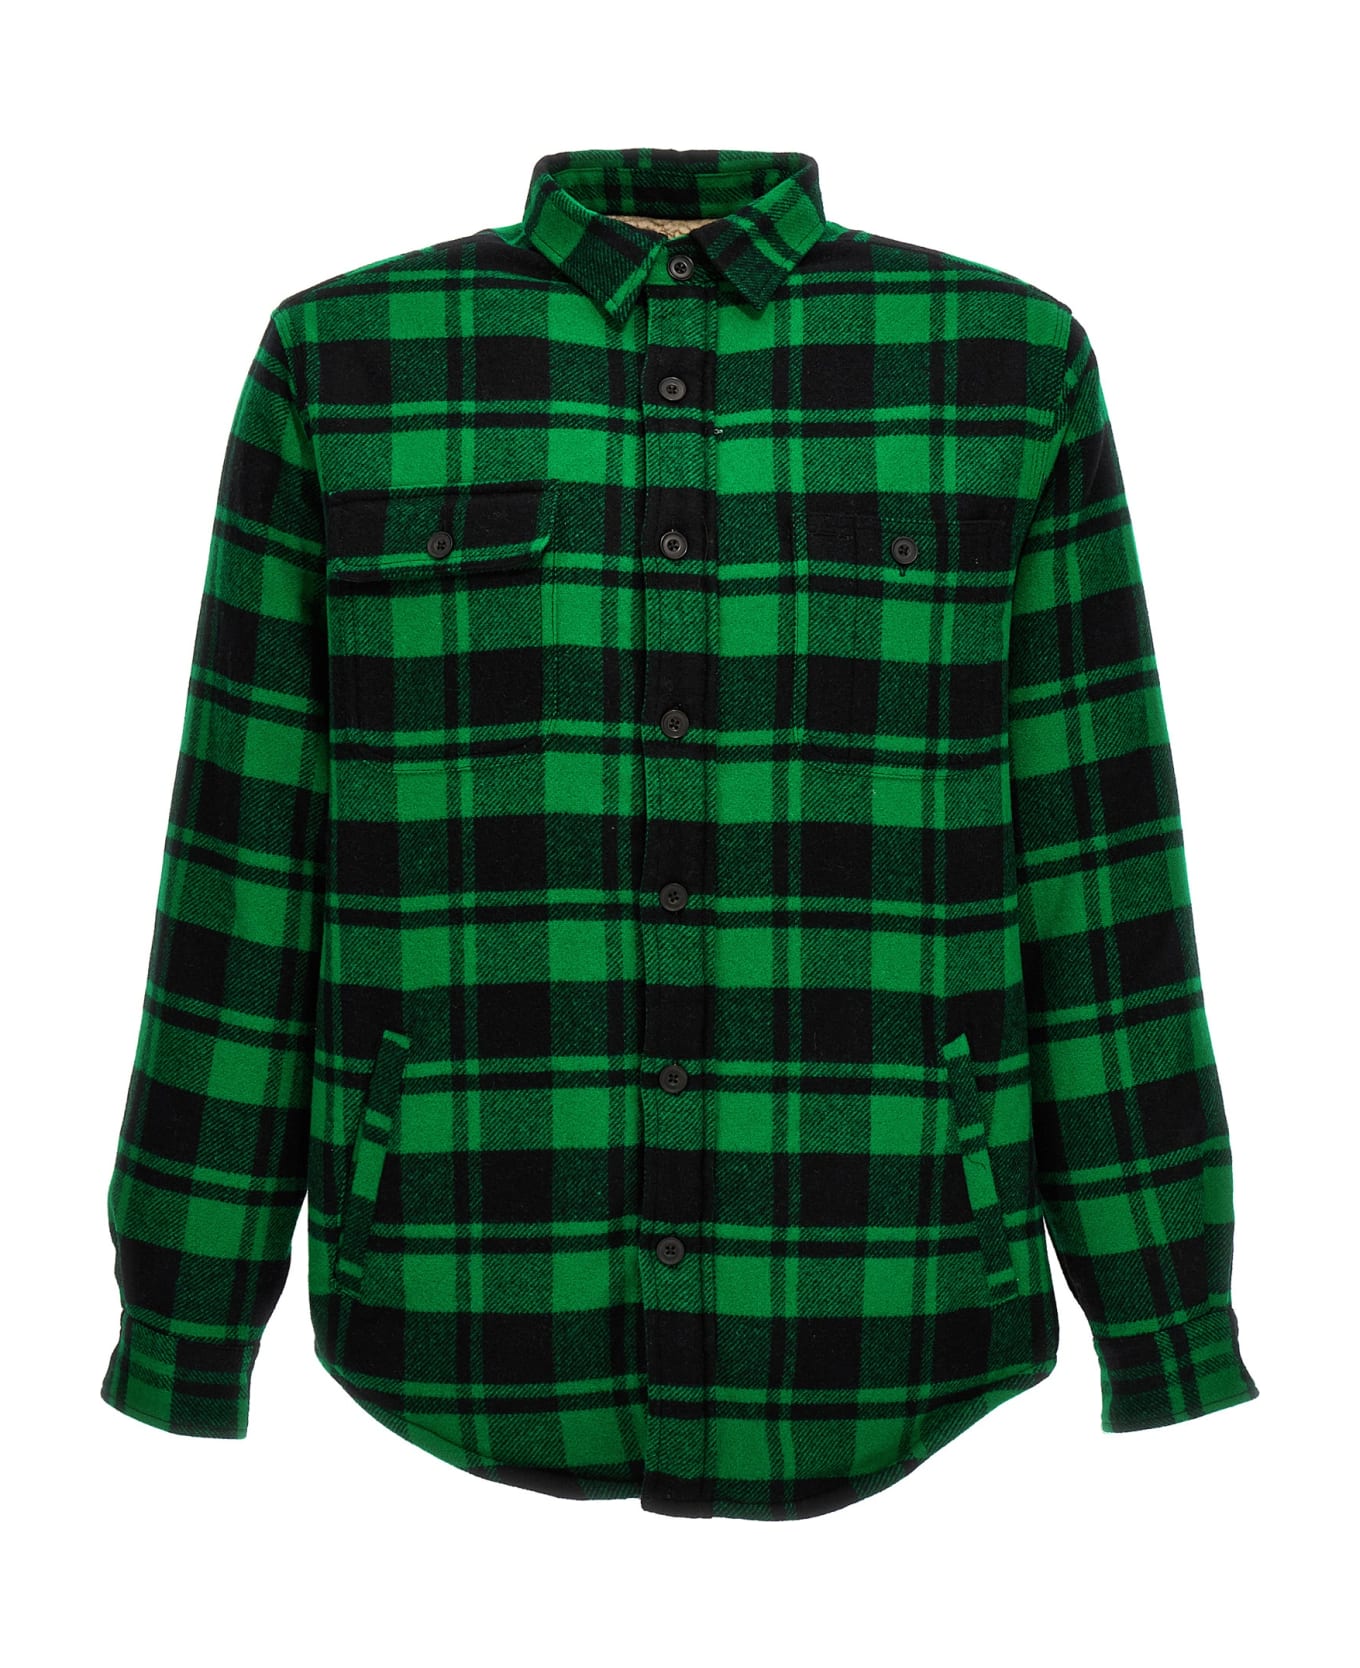 Polo Ralph Lauren Check Jacket - Green